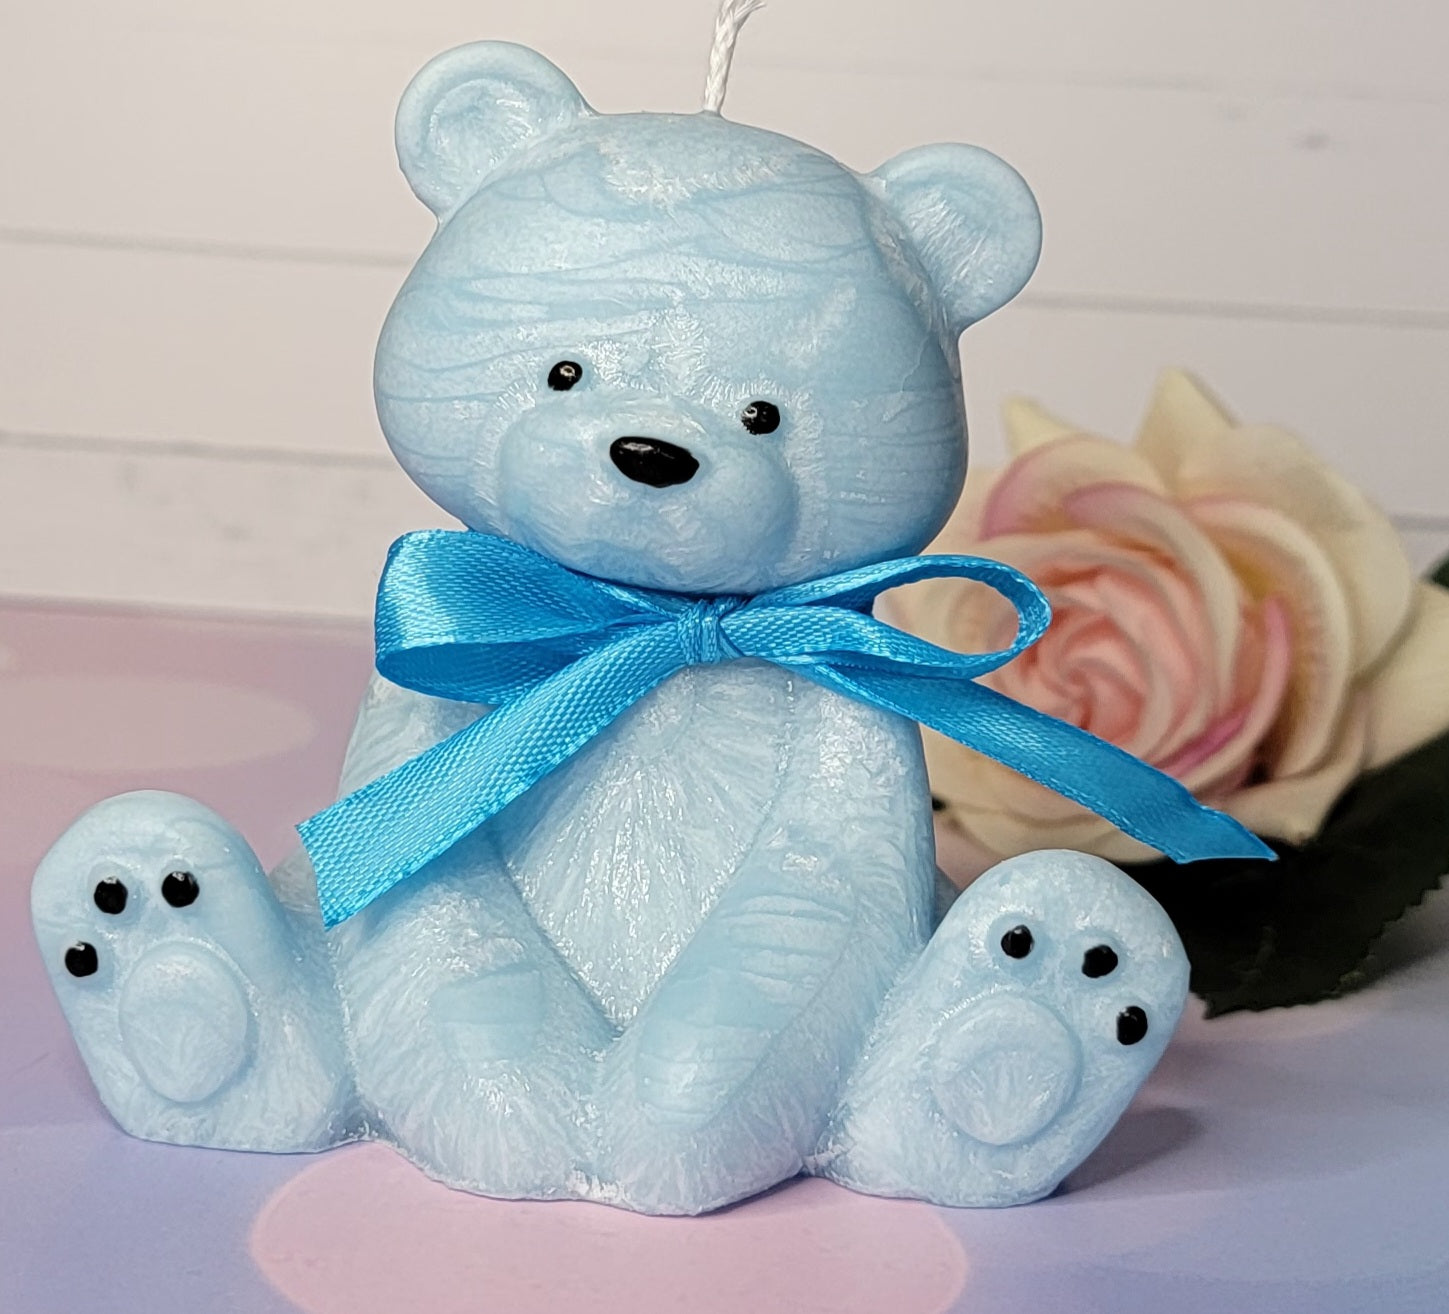 Teddy Bear Candles - Cute candles